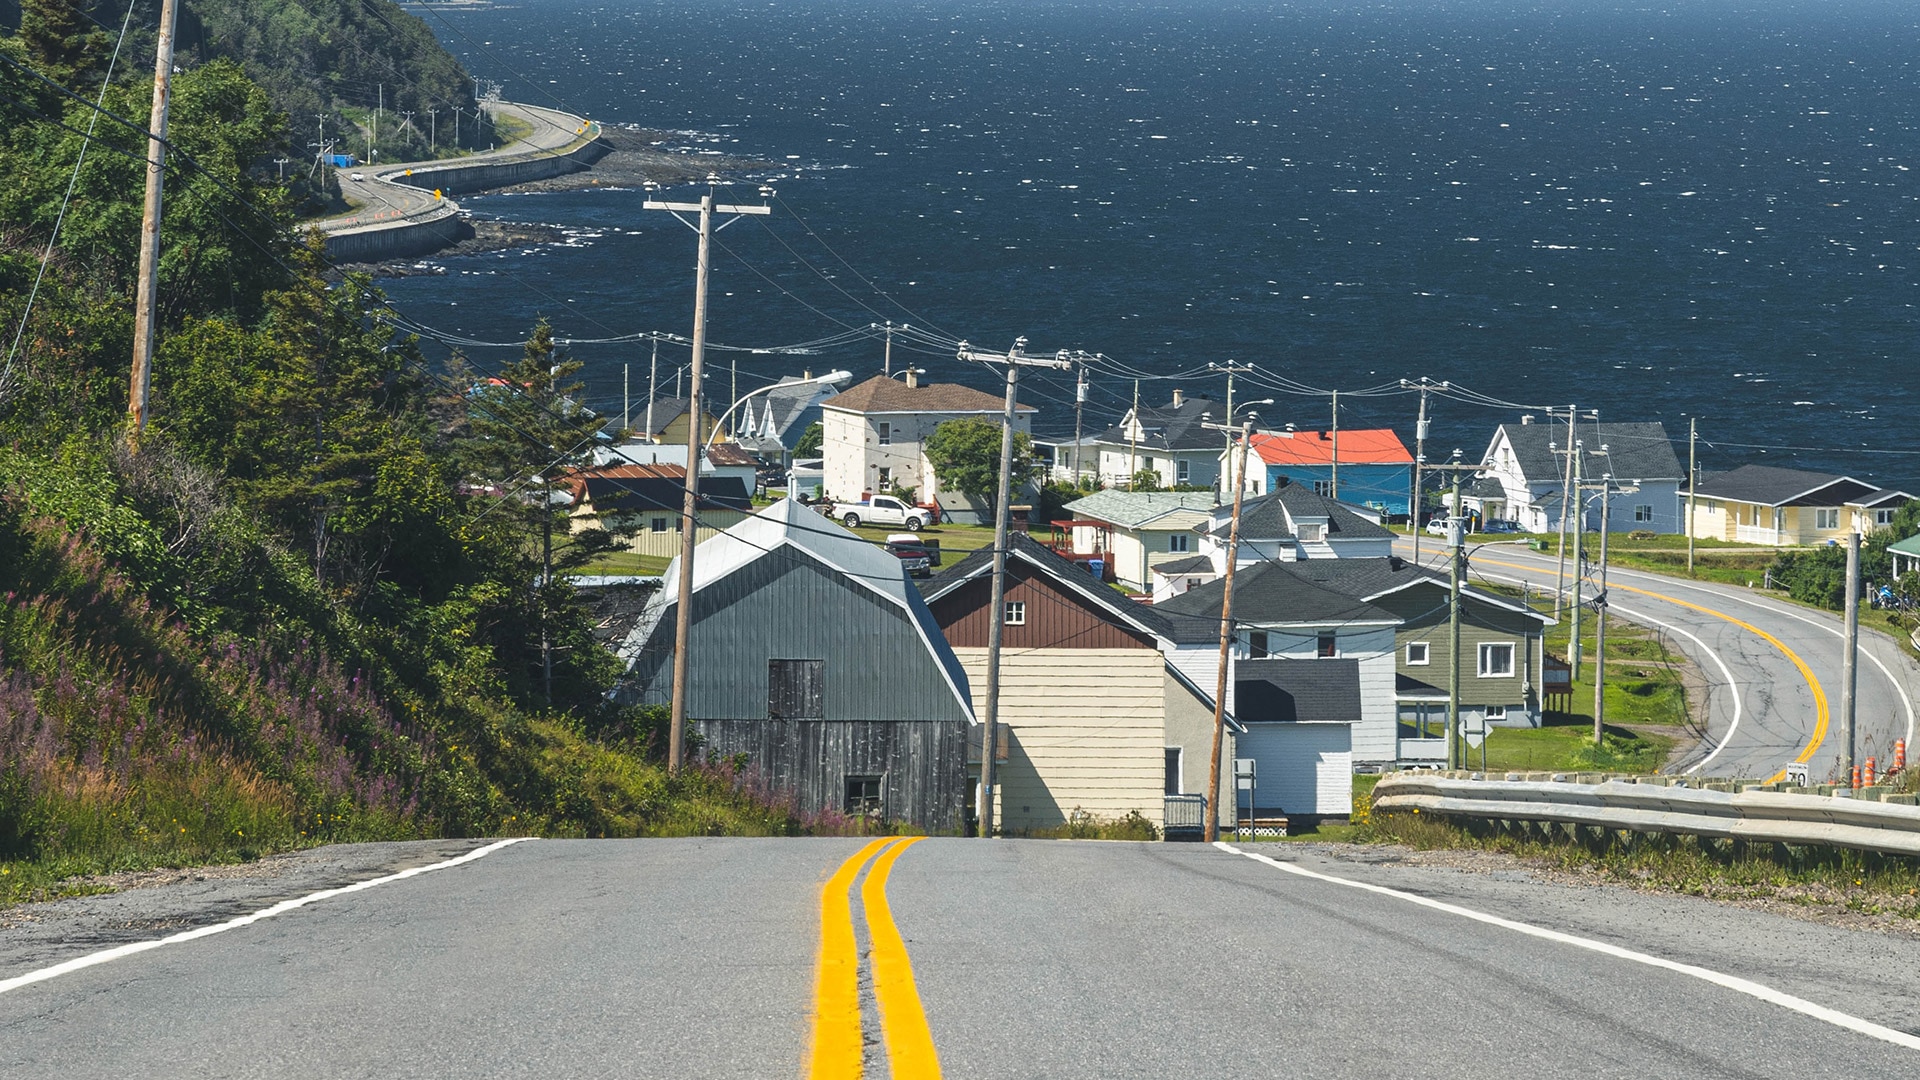 The views overlooking seaside town in Gaspé